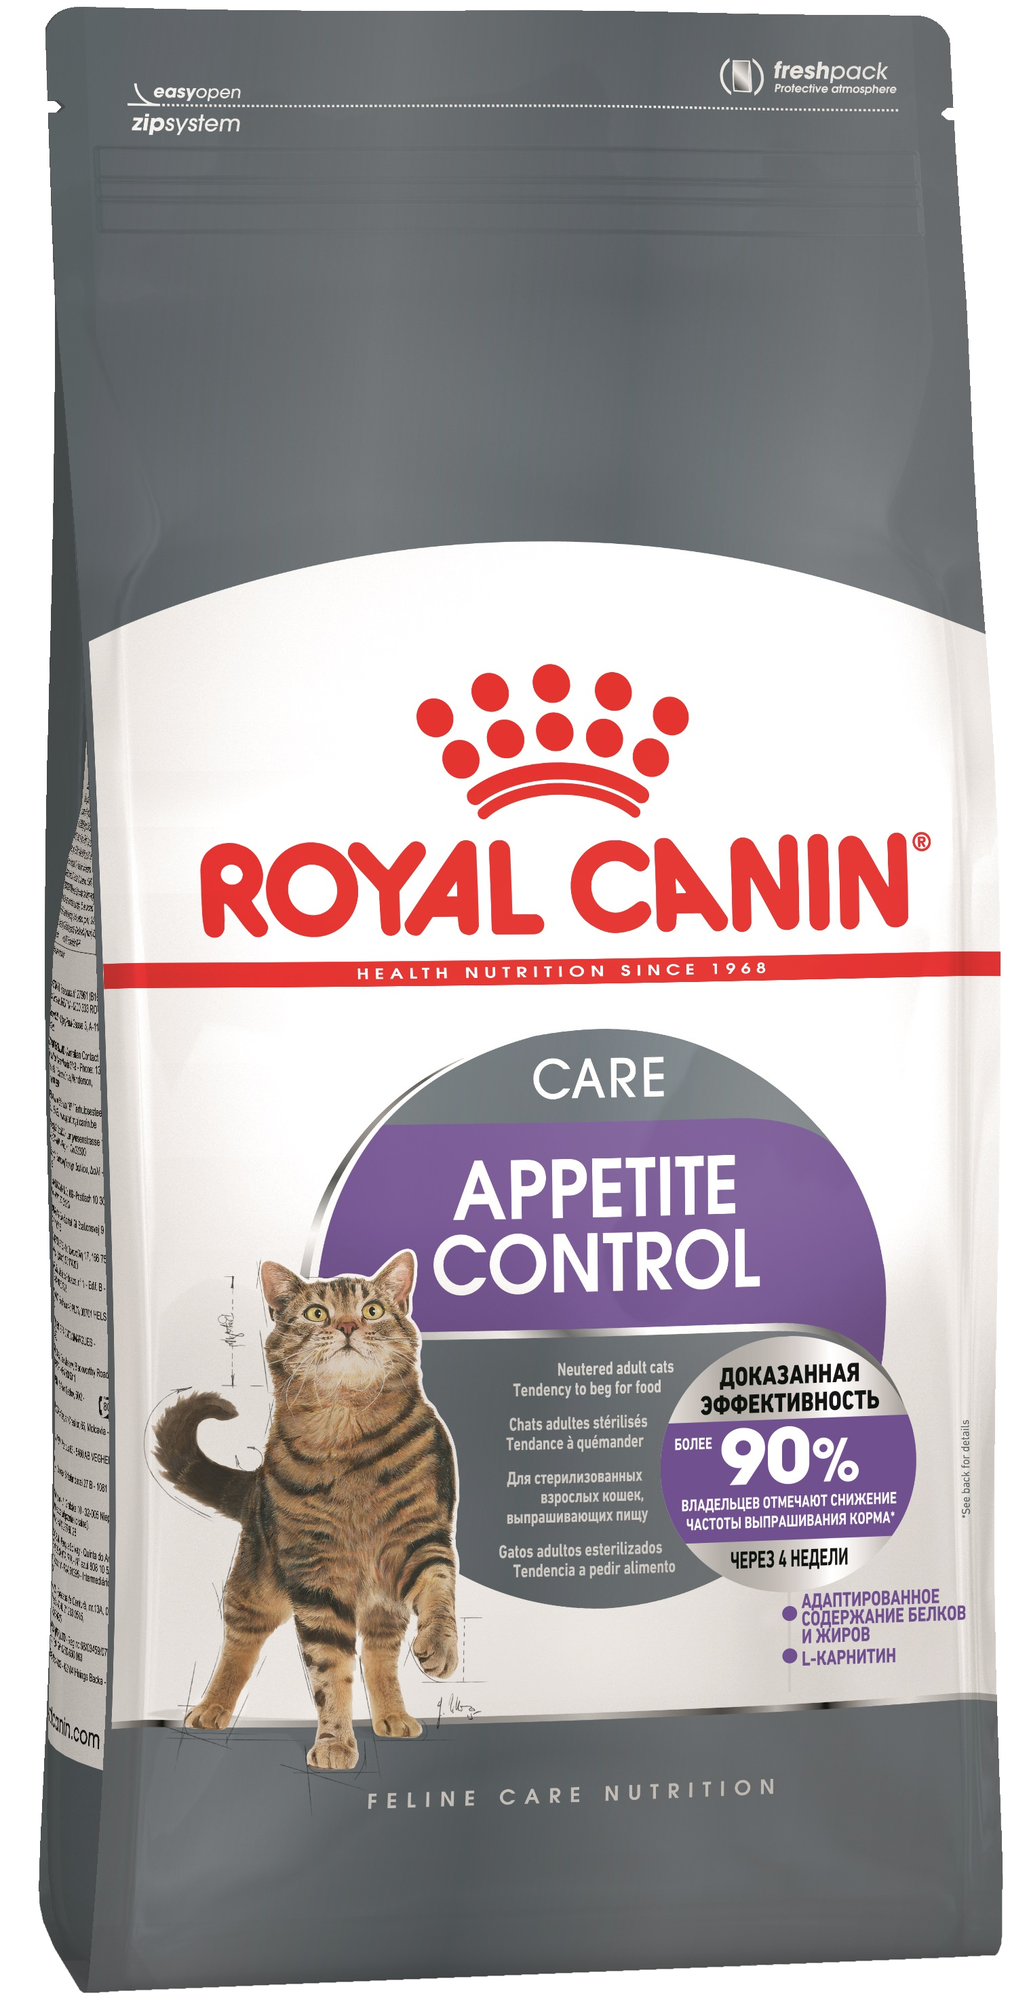 Royal Canin Appetite Control Sterilised для стерилизованнных кошек, склонных к выпрашиванию еды Курица, 3,5 кг.